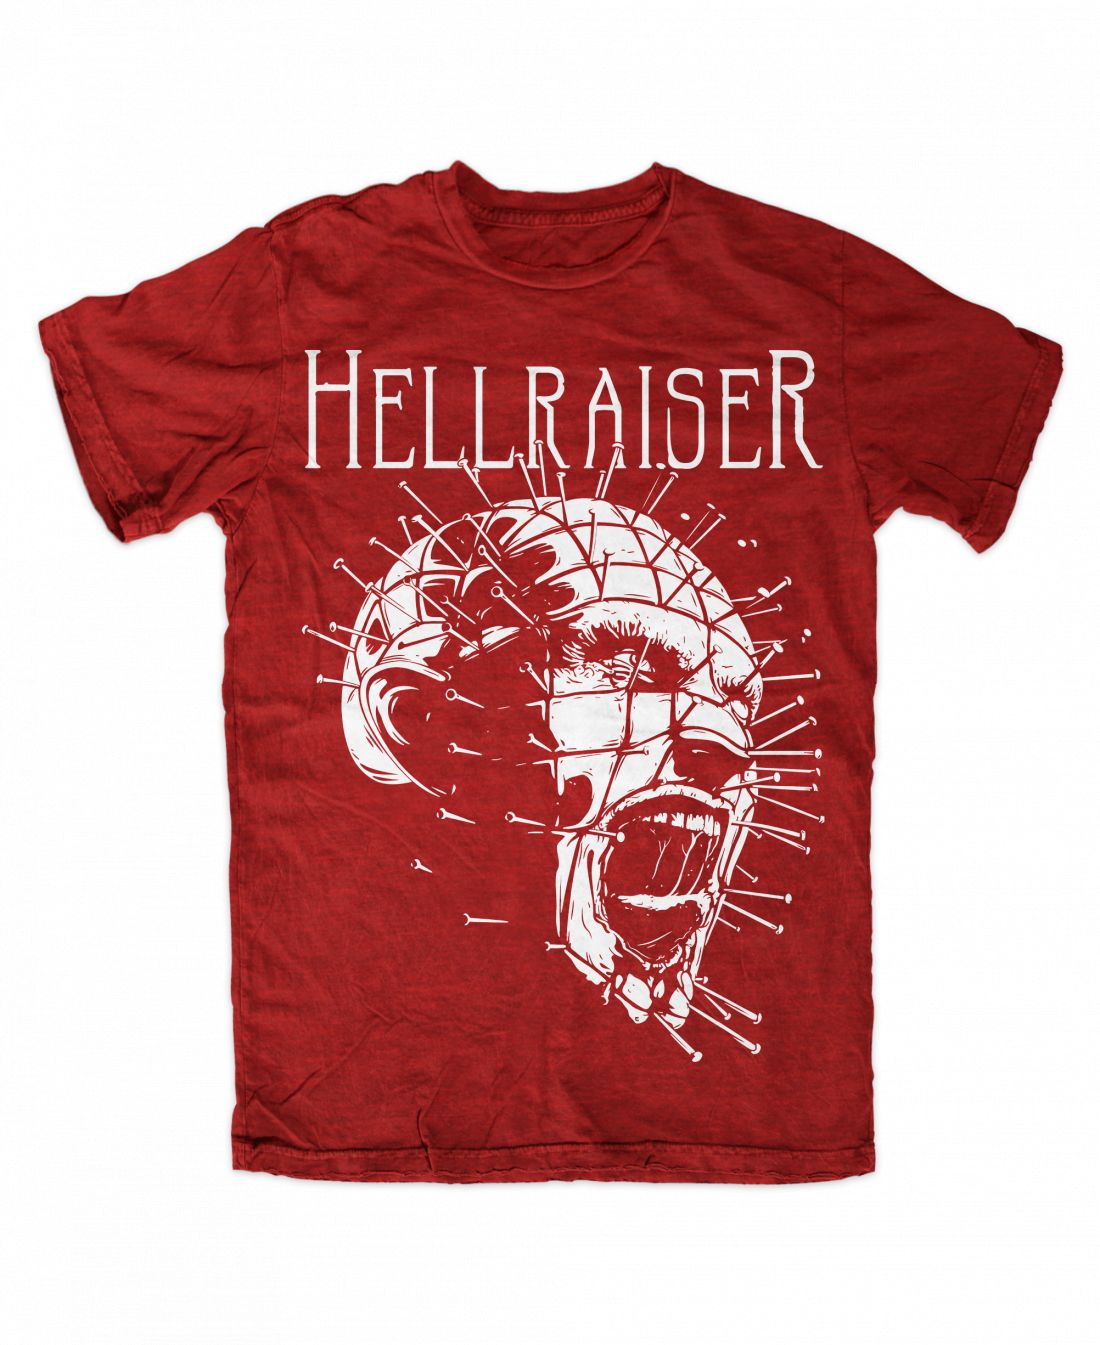 Hellraiser 002 (antique red póló)